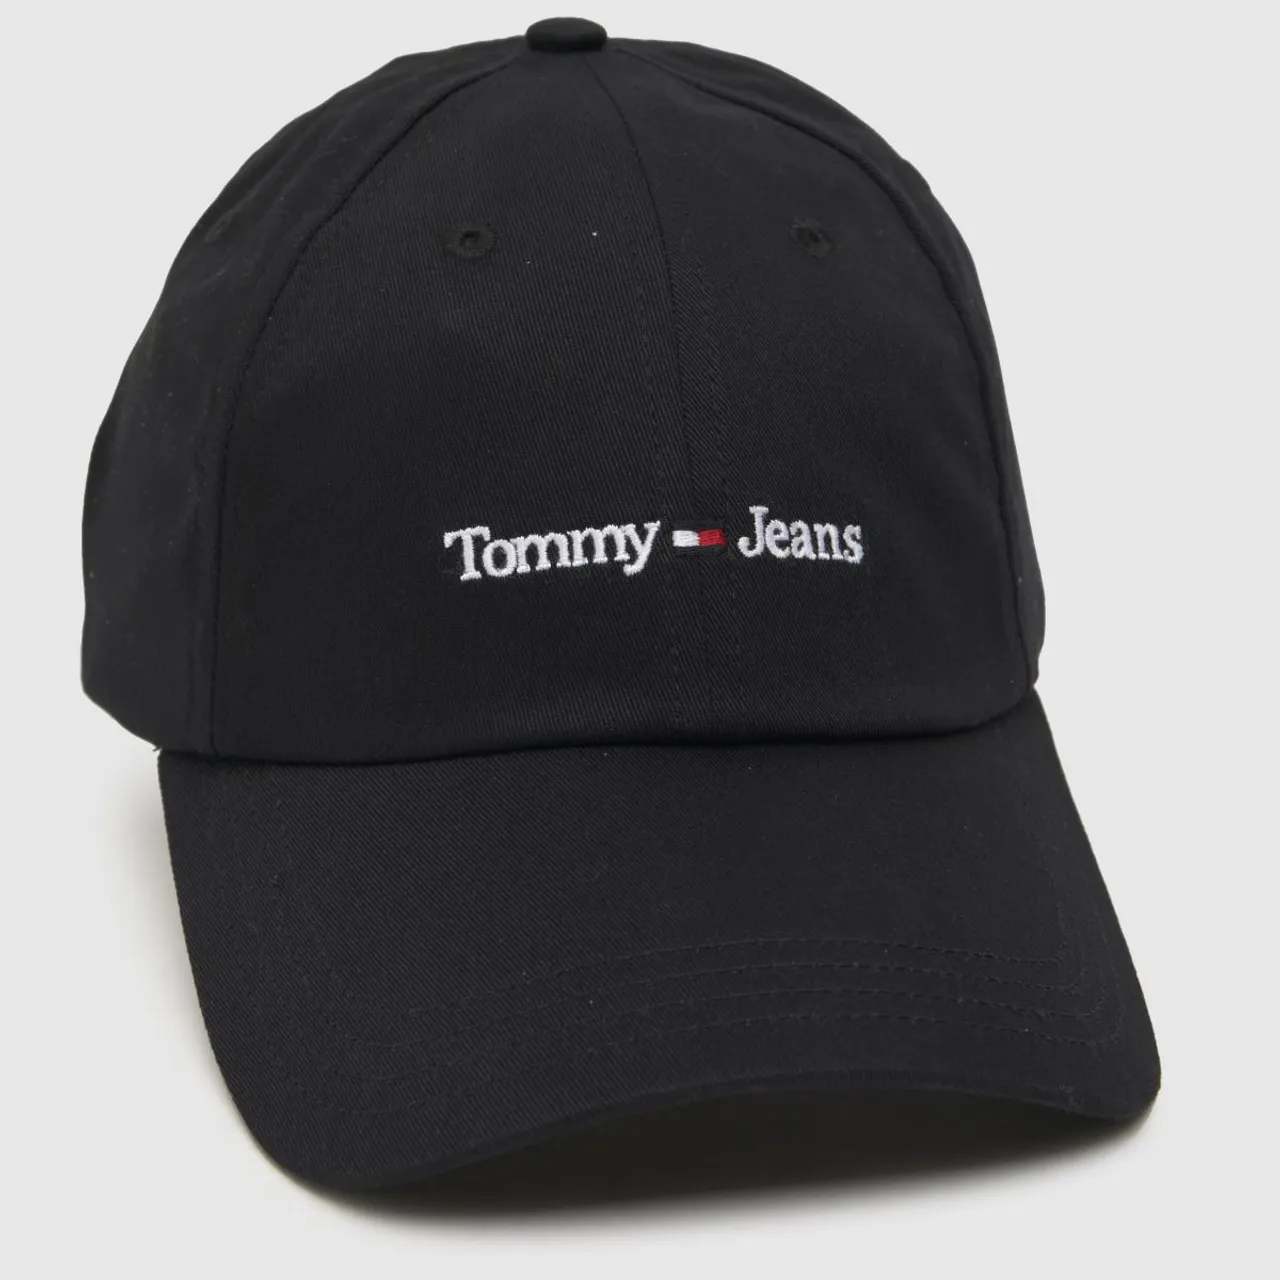 Tommy Jeans Black Sport Cap